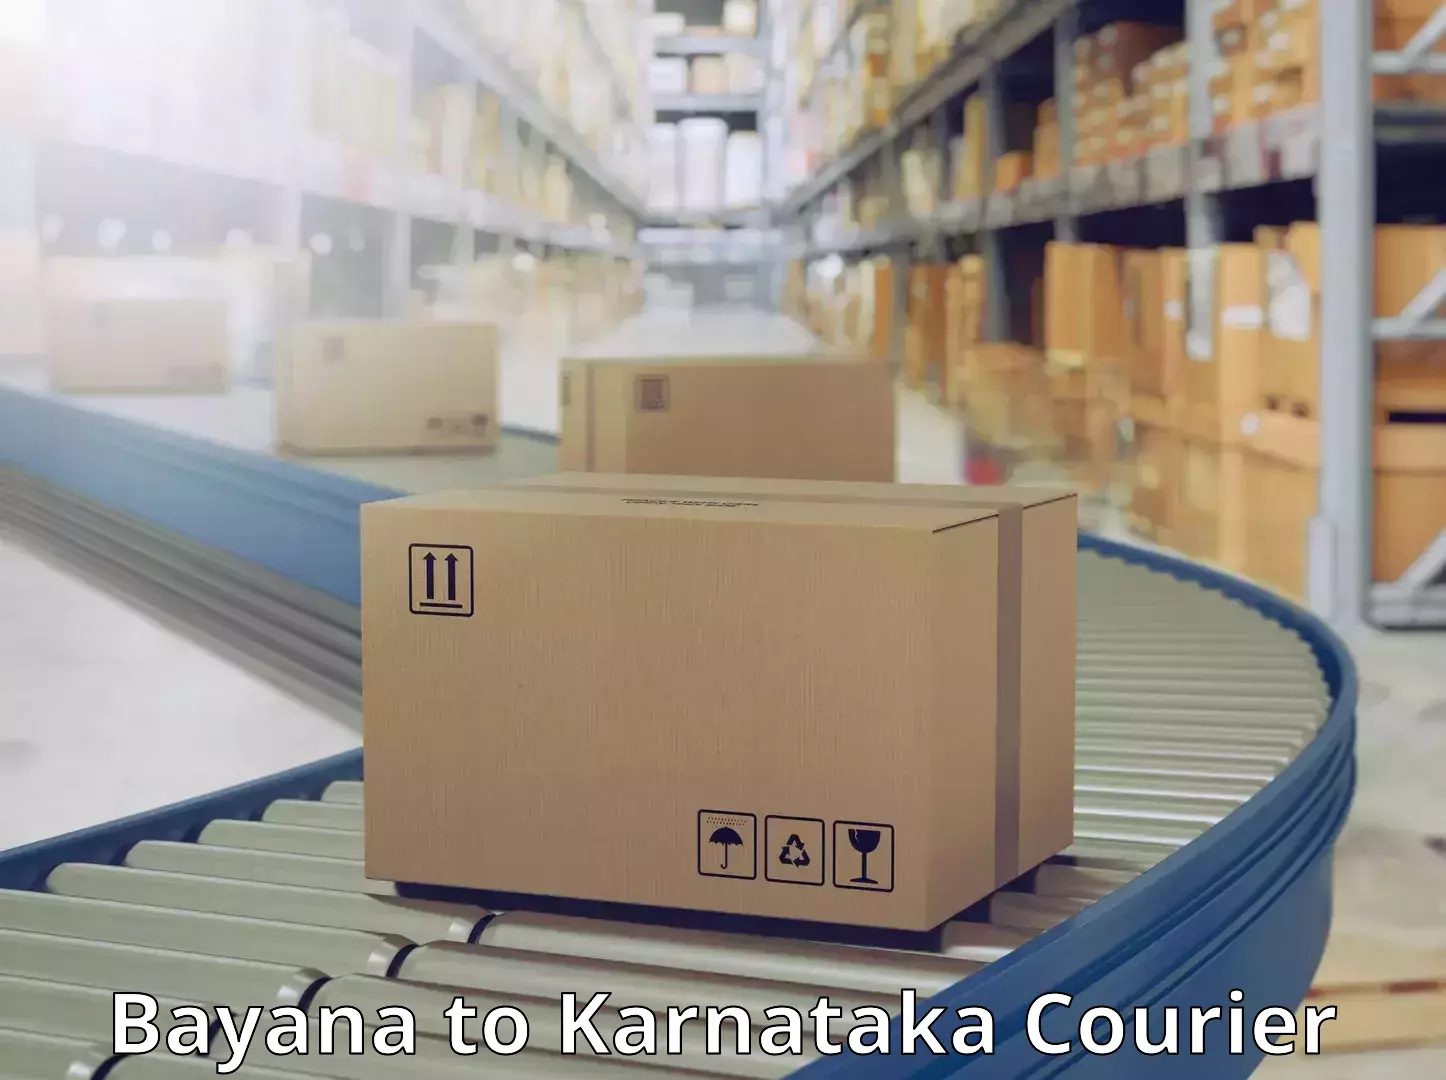 Global courier networks Bayana to Karnataka